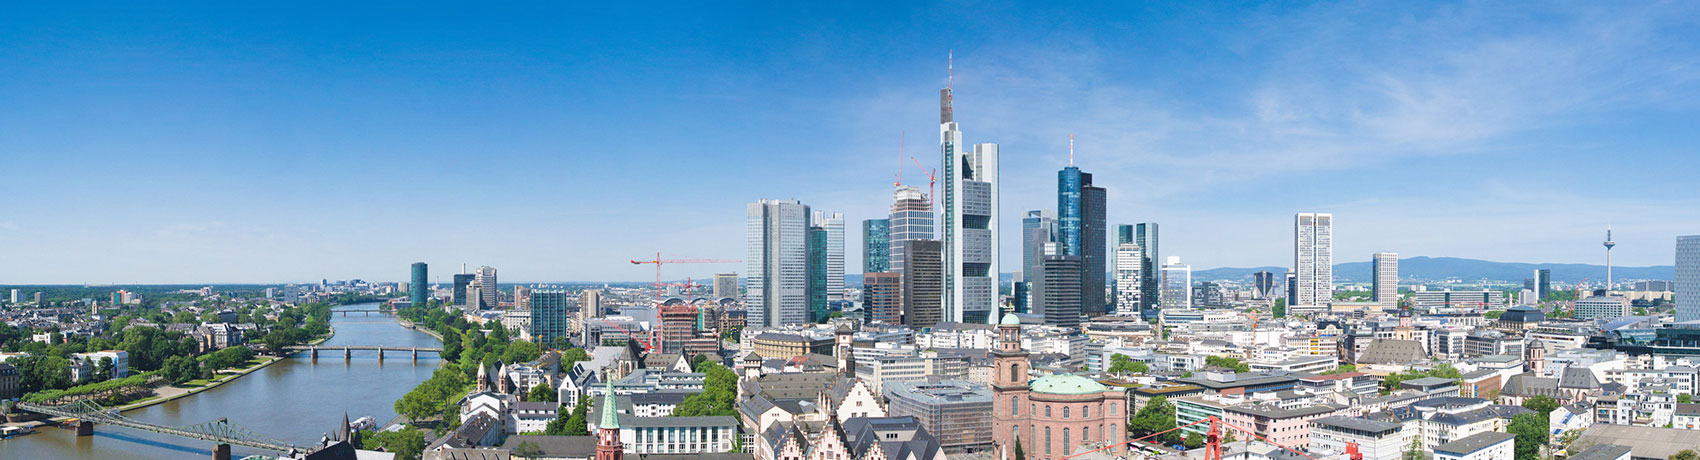 Skyline von Frankfurt / Bild: Fotolia.de Nr. 58270767 © eyetronic